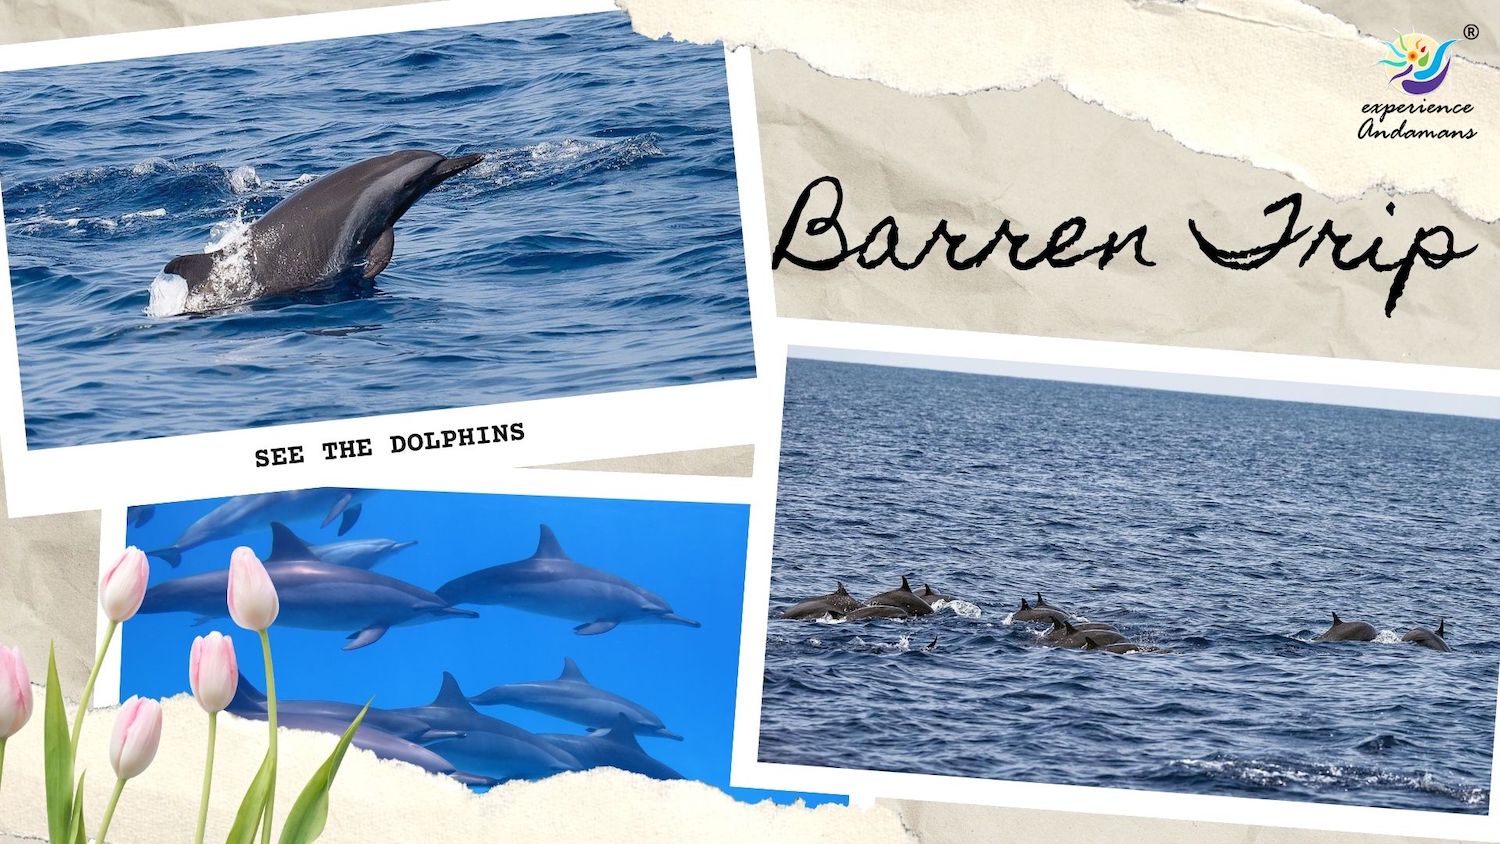 dolphin sighting during barren trip